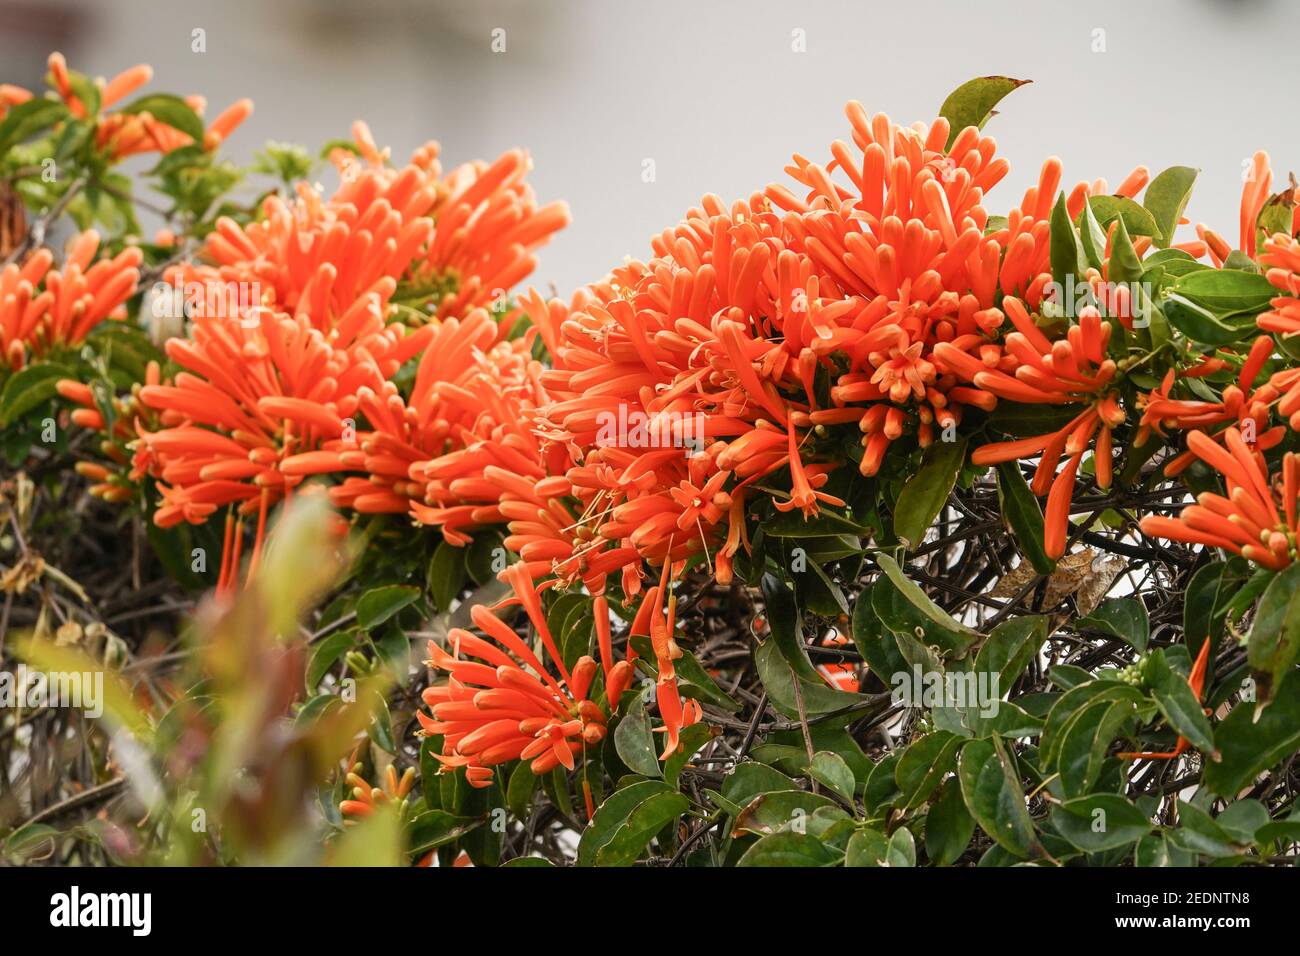 Flowers of Orange trumpet vine (Pyrostegia venusta) a winter flowering climber, Spain- Stock Photo